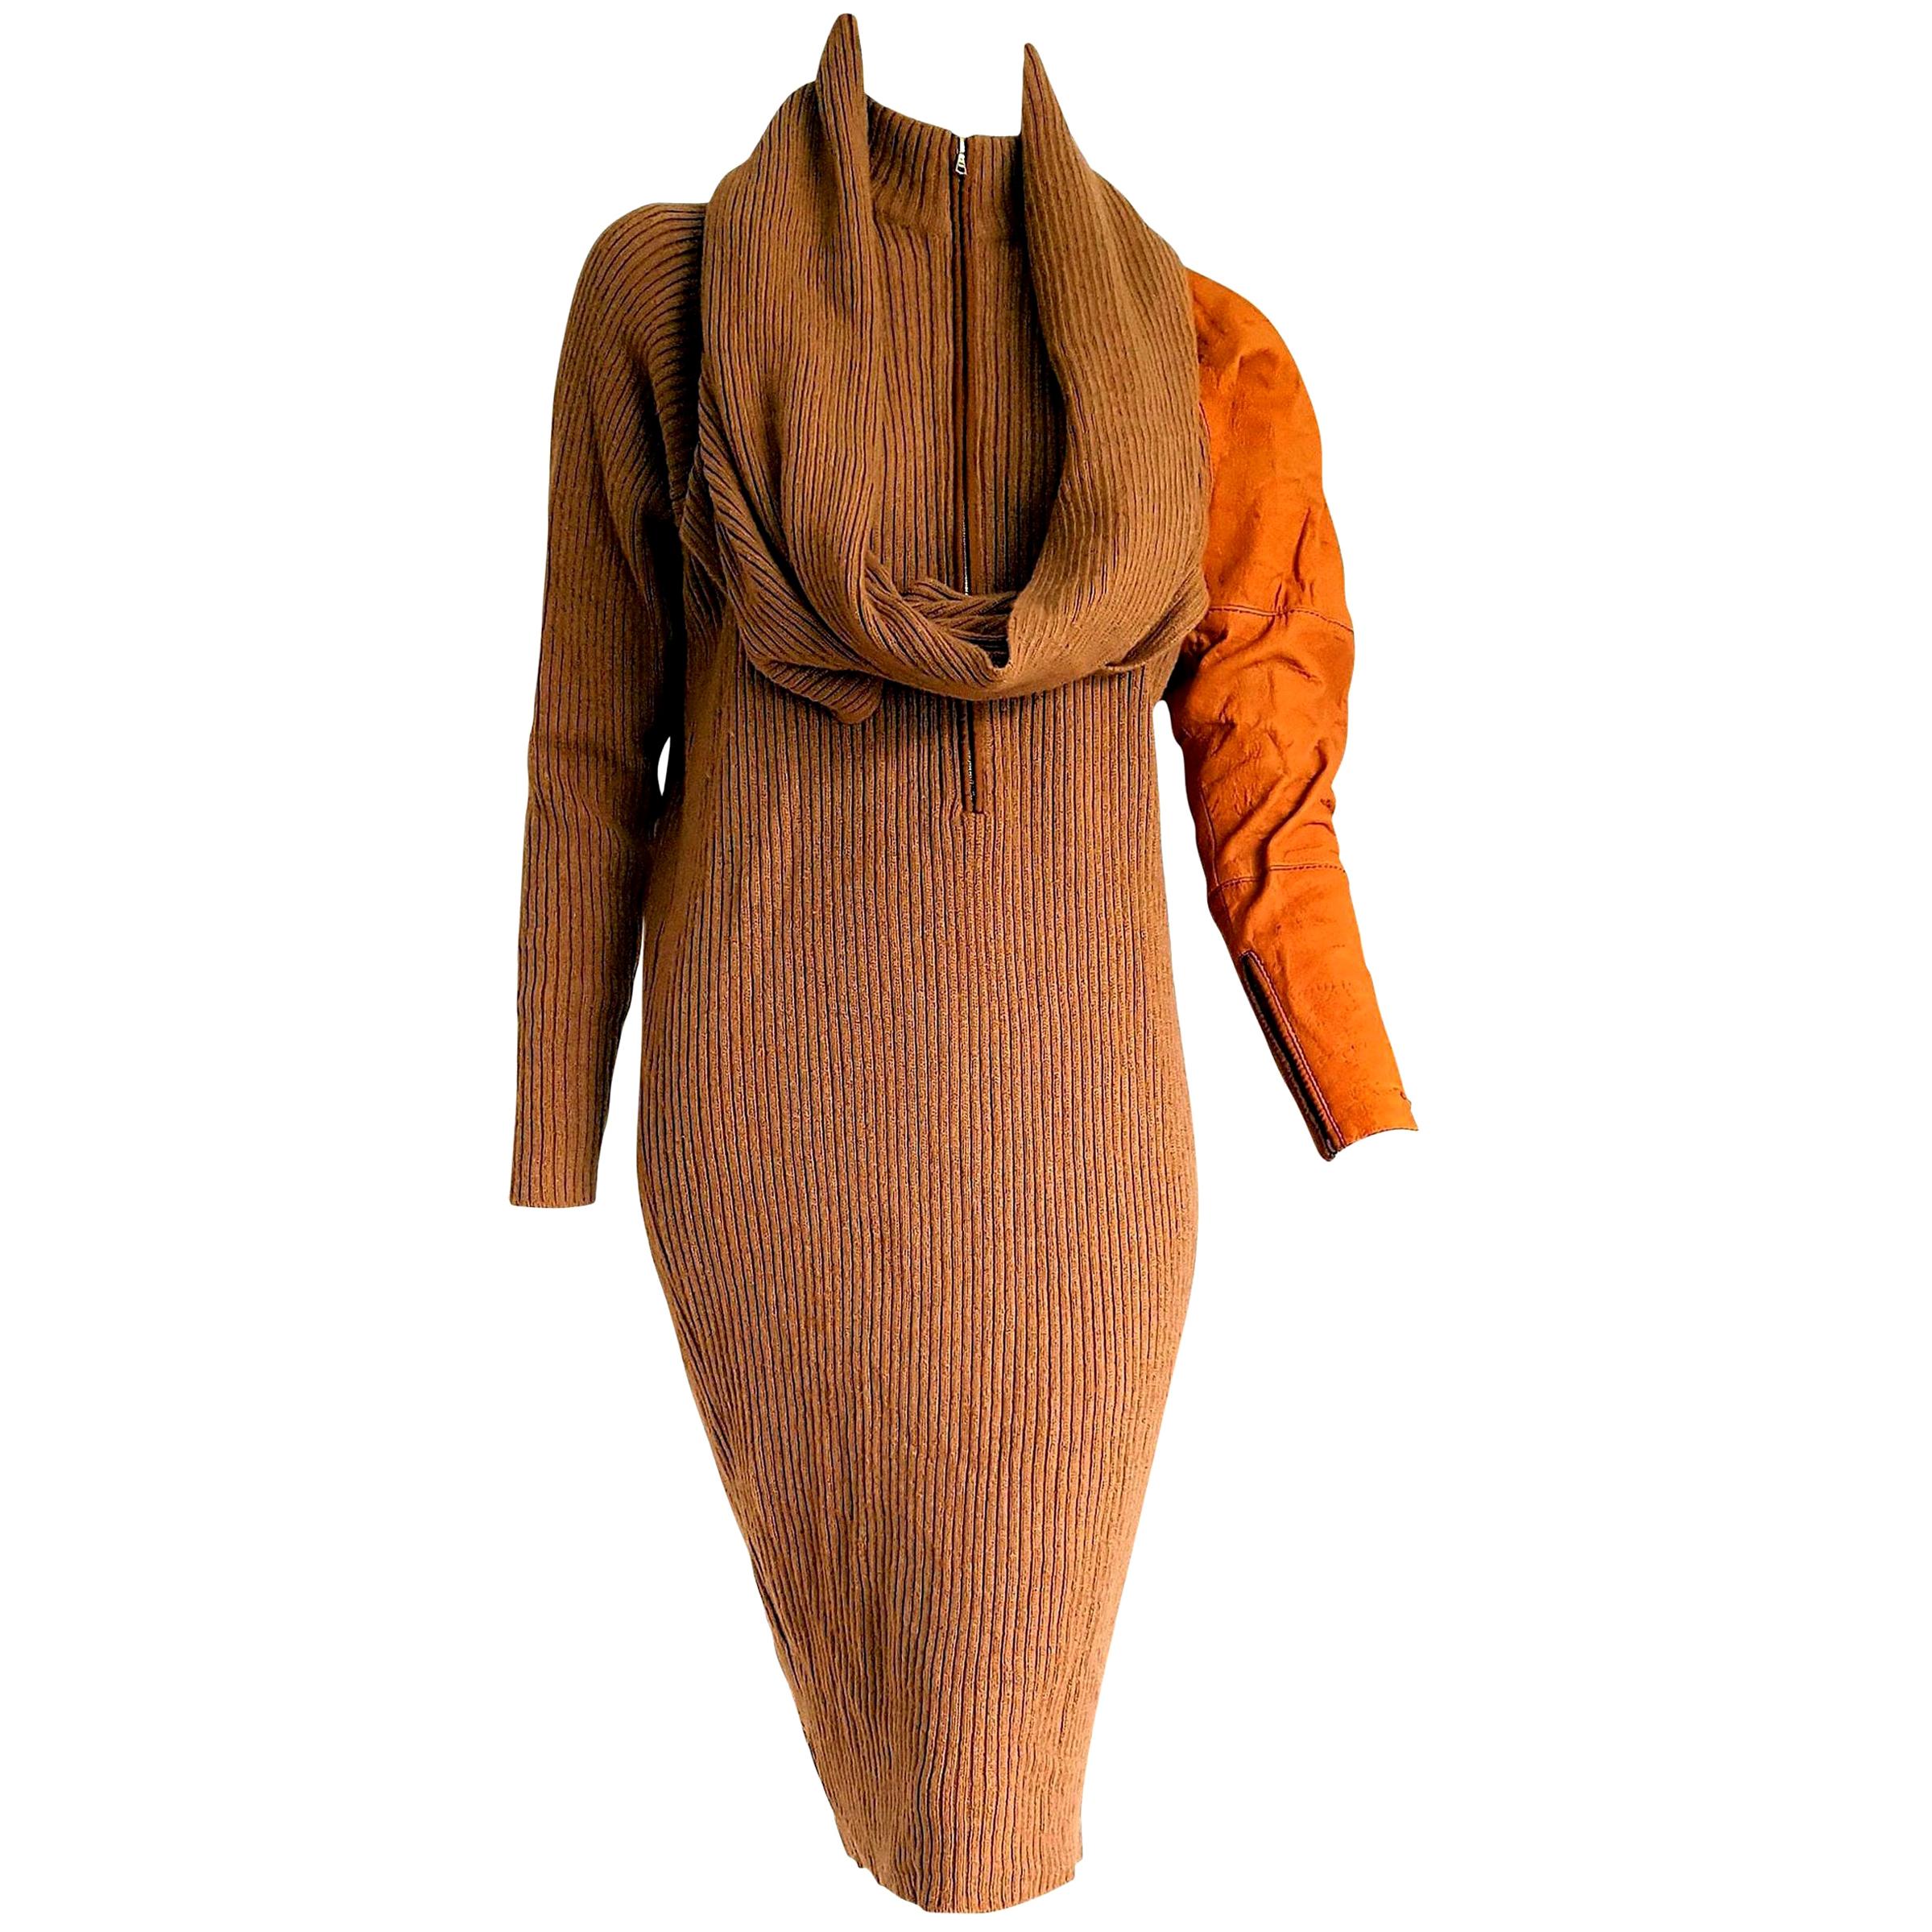 Gianfranco FERRE "New" One Deerskin Sleeve Mesh Camel Dress - Unworn For Sale